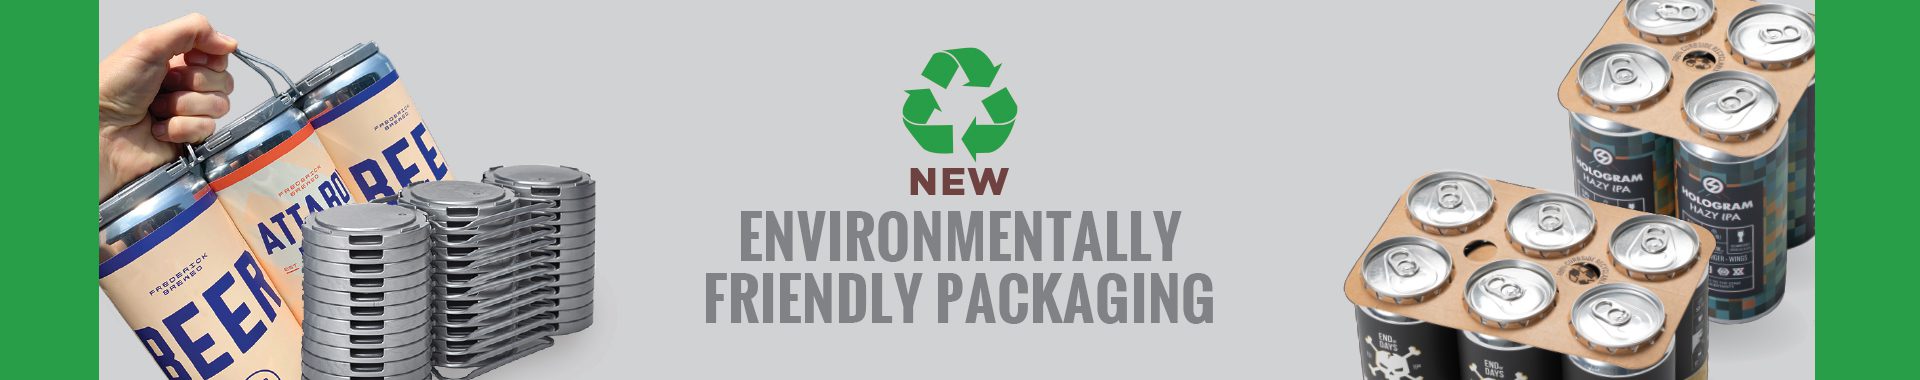 new environmentally friendly packaging